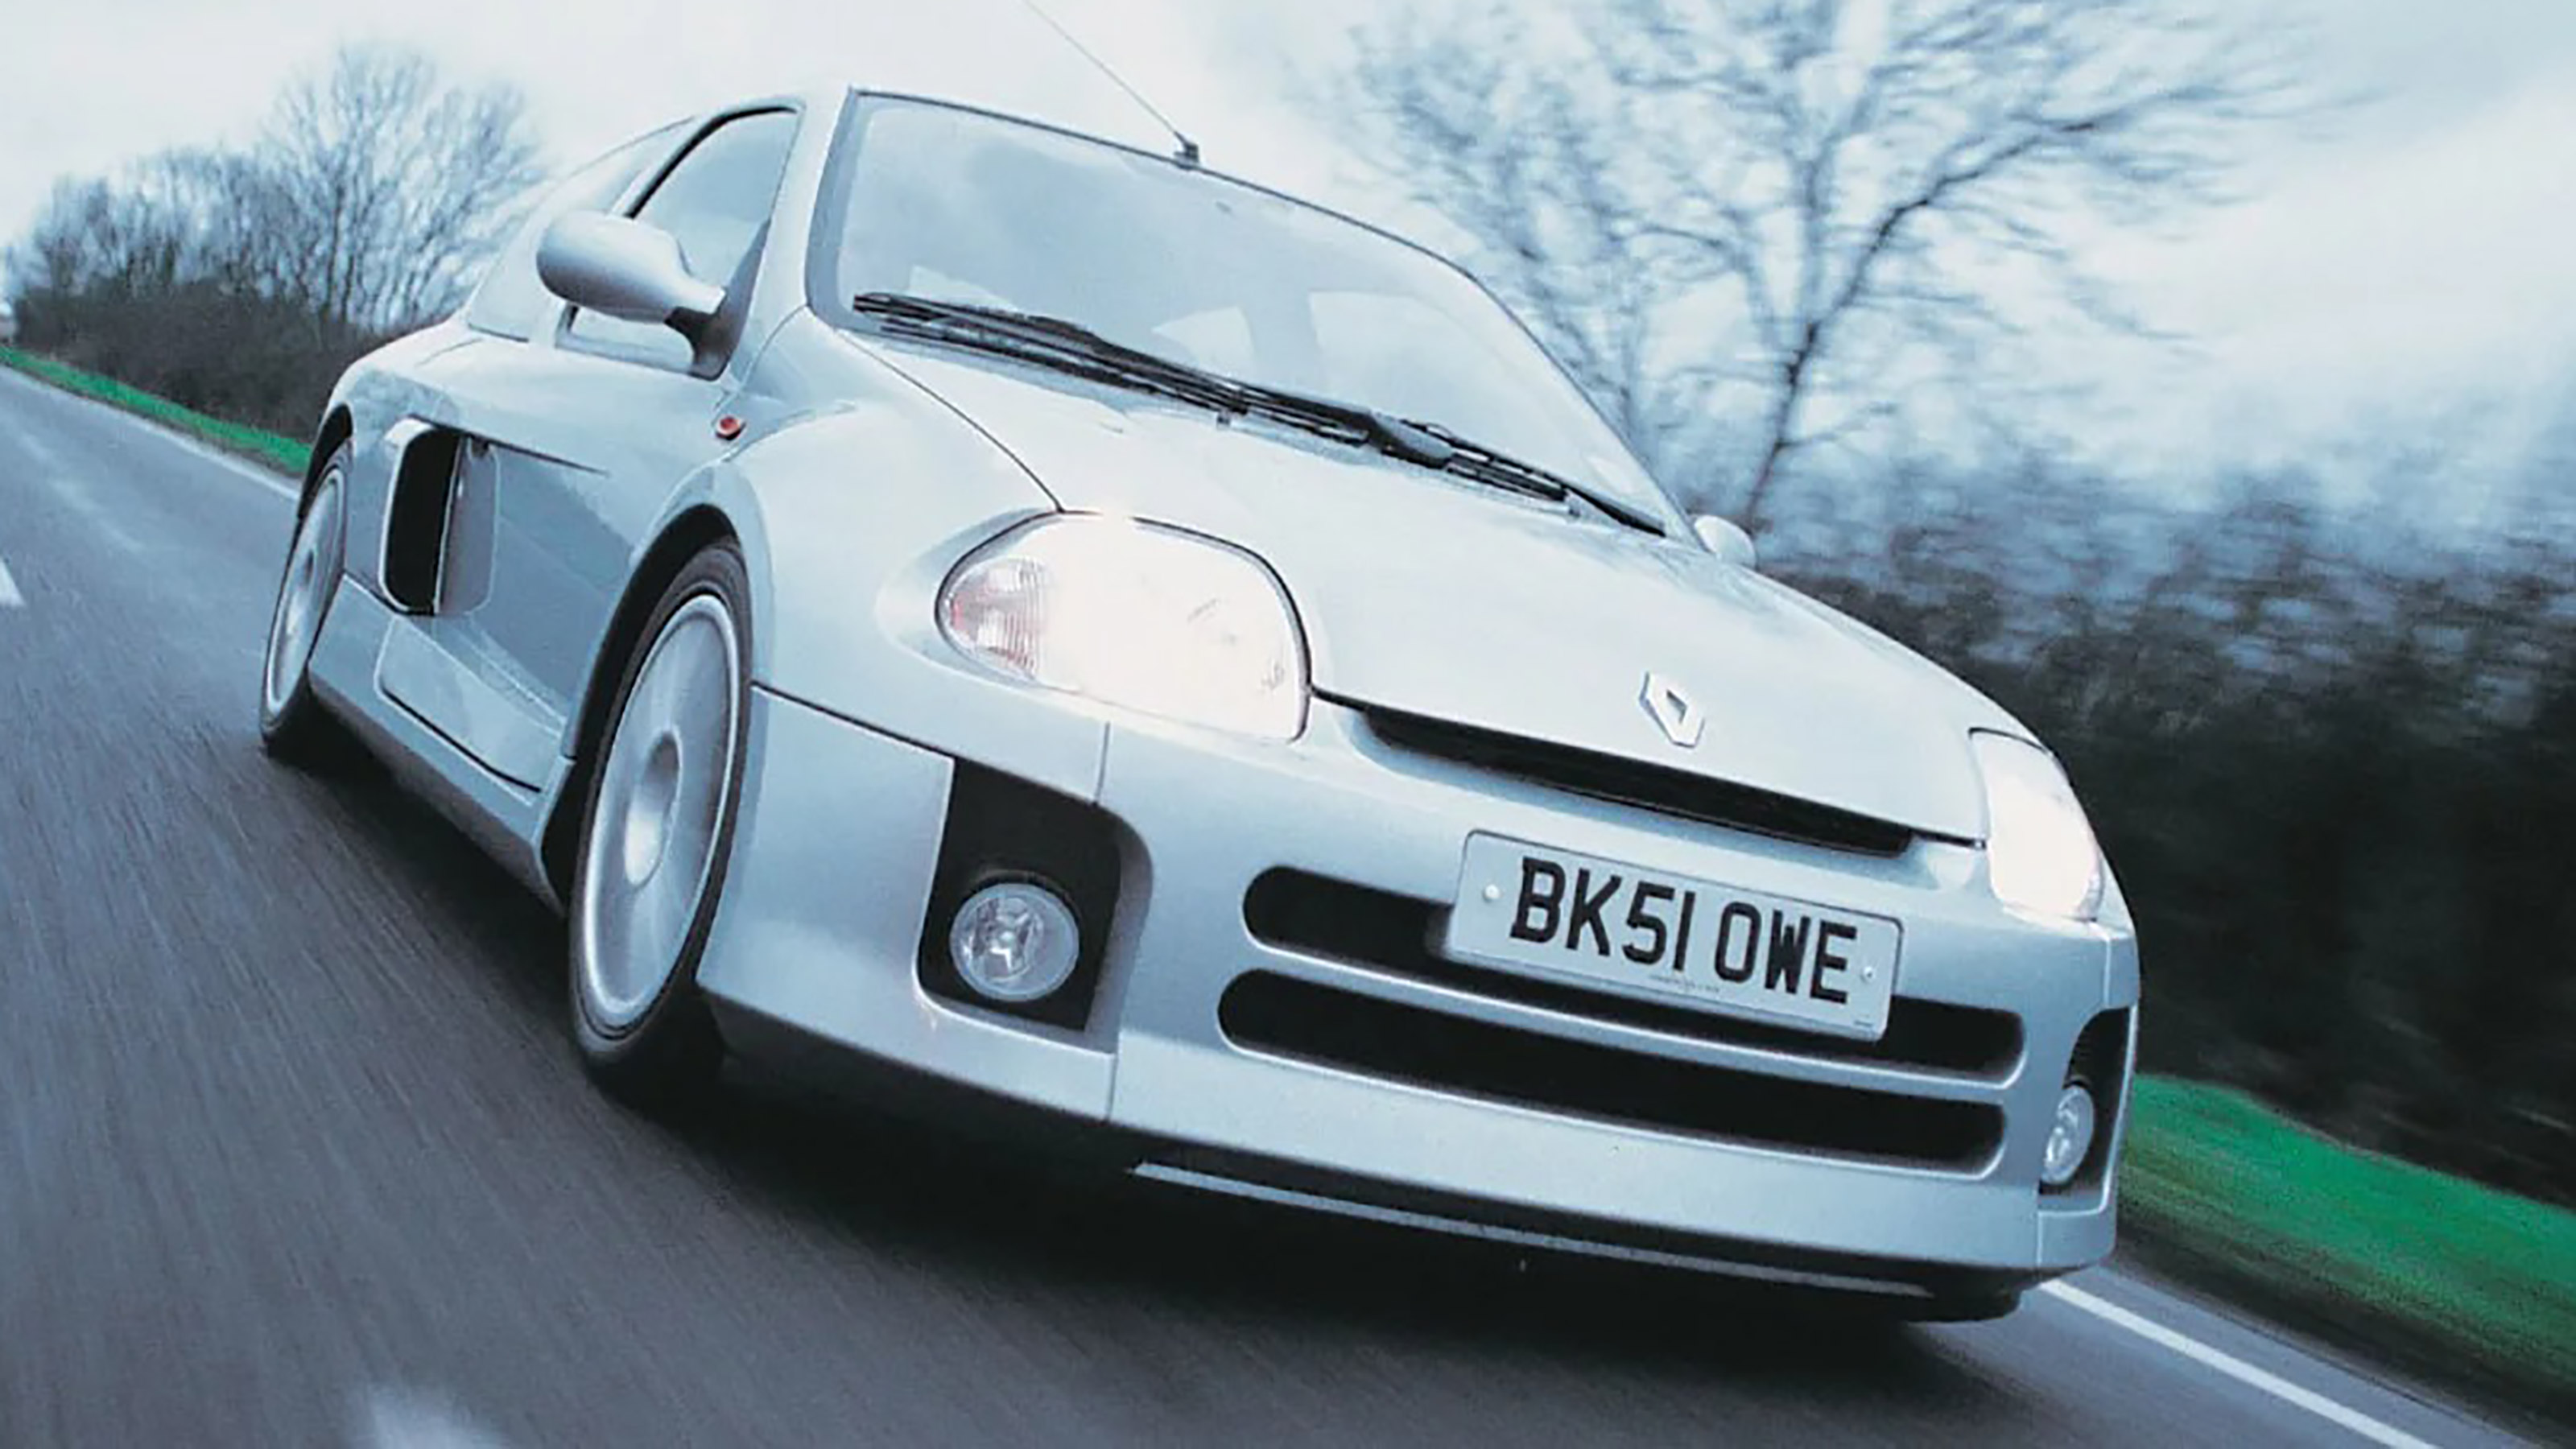 Renault Clio V6 Review - The most insane hot hatch ever? - Club Clio UK  Website